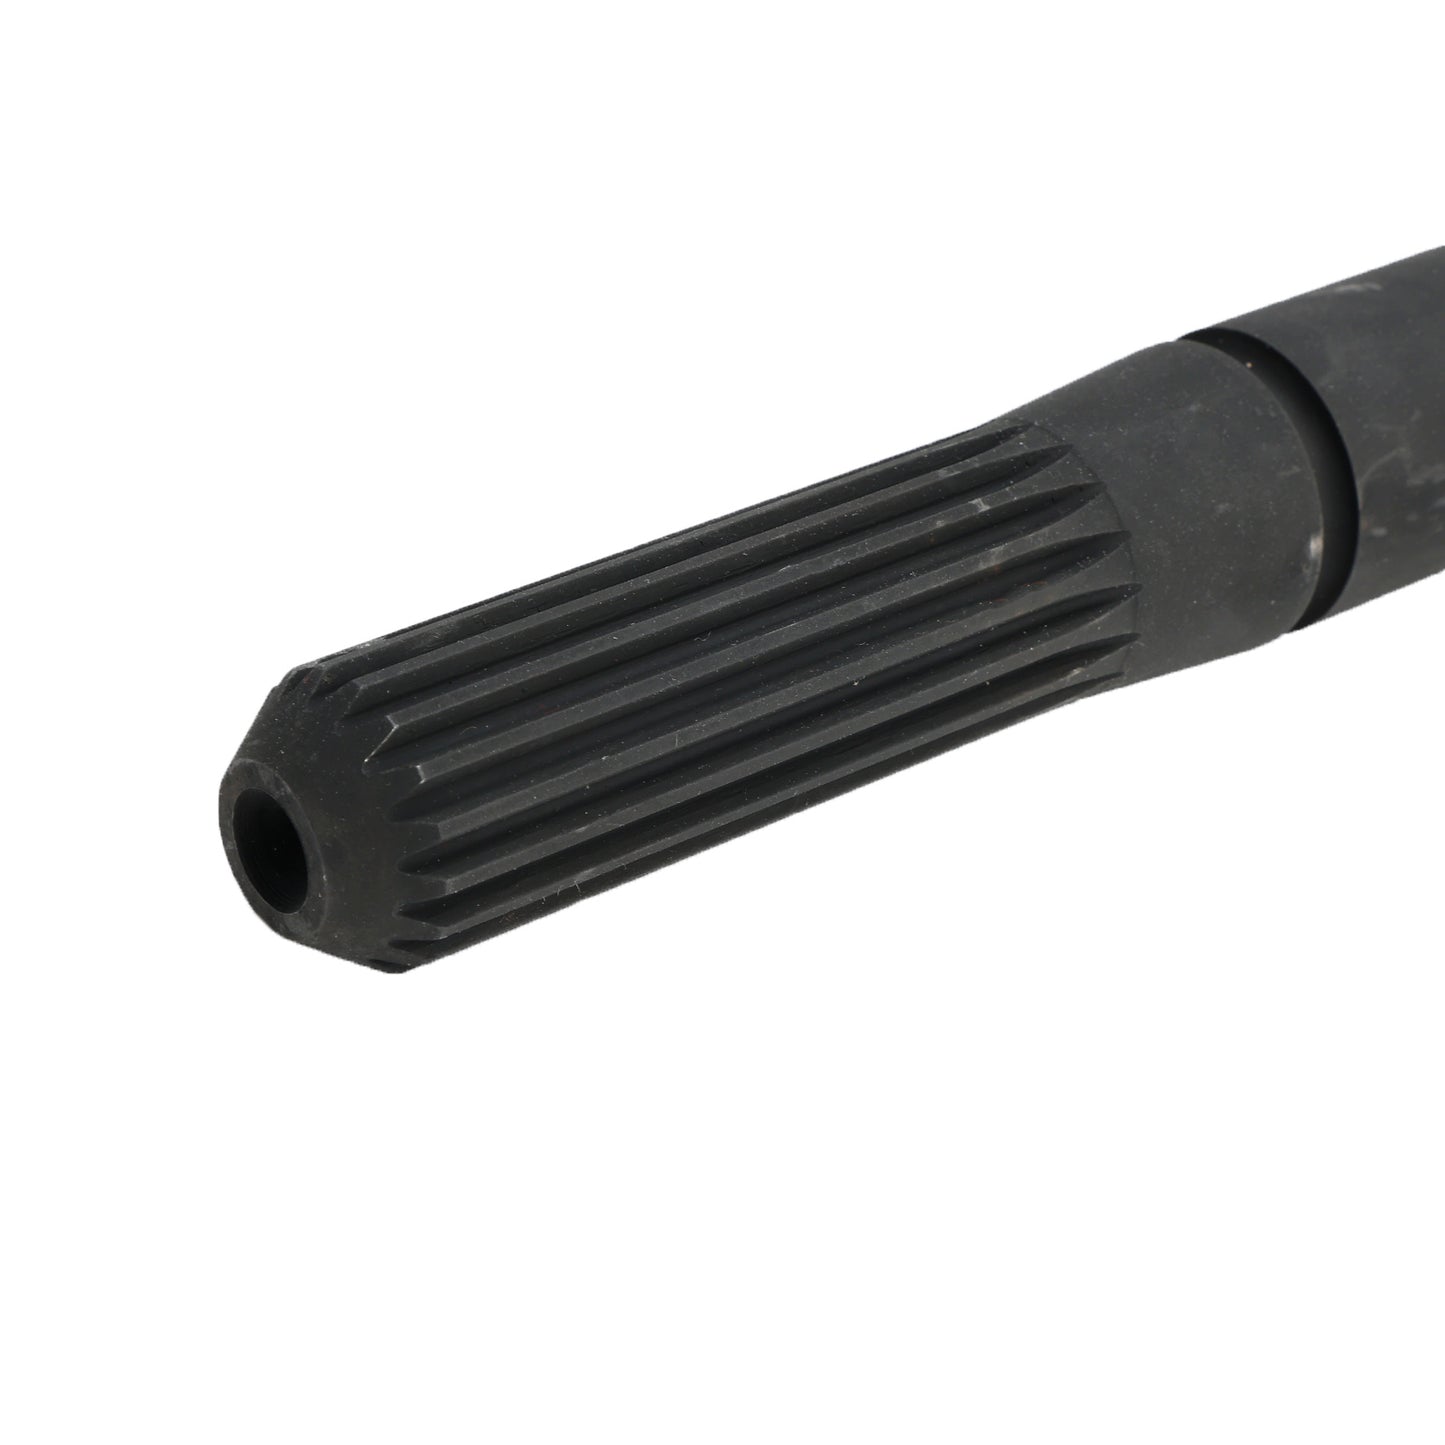 U-Juni-Drivewaft-Yoke-Kit für SX-A DP-SM SX-M XPD-B DPS-A SX-CT 3860842